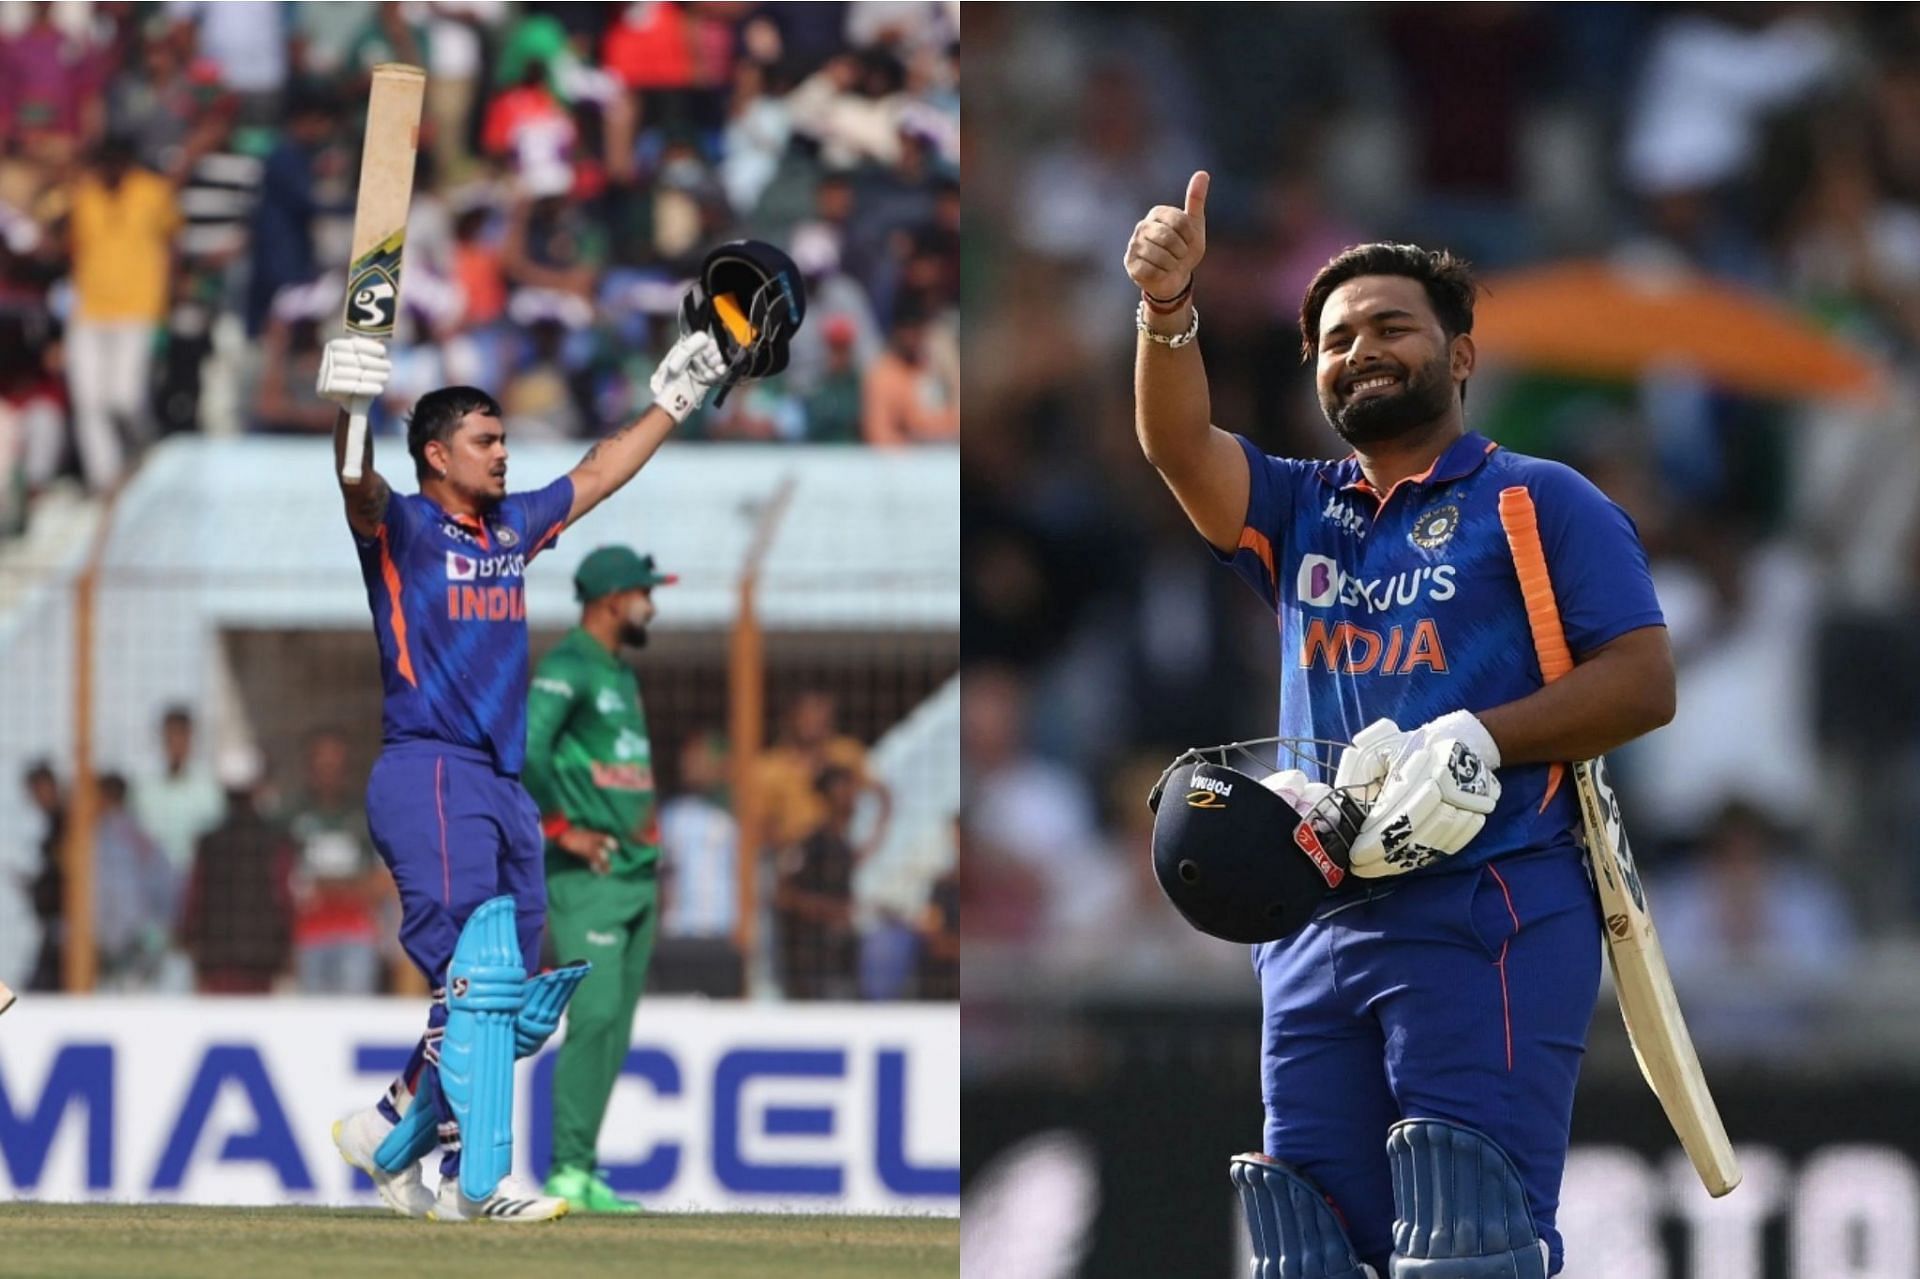 Ishan Kishan and Rishabh Pant played two of the best ODI innings of 2022 